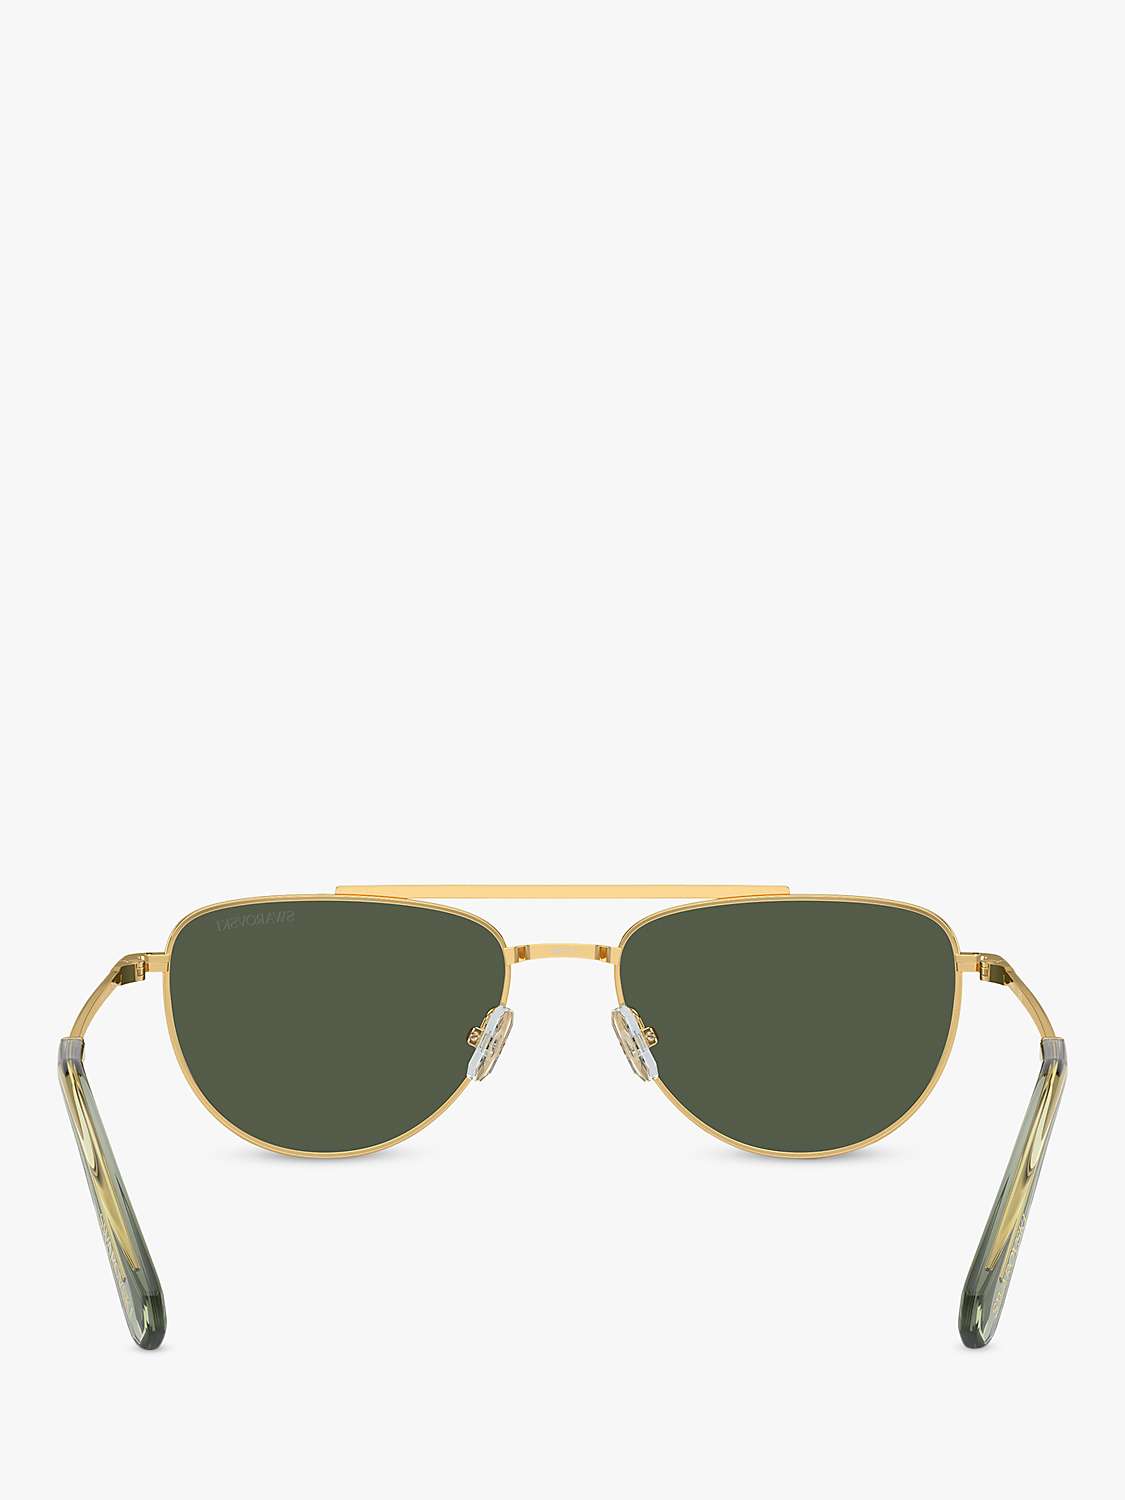 Buy Swarovski SK7007 Women's Irregular Sunglasses, Gold/Green Online at johnlewis.com